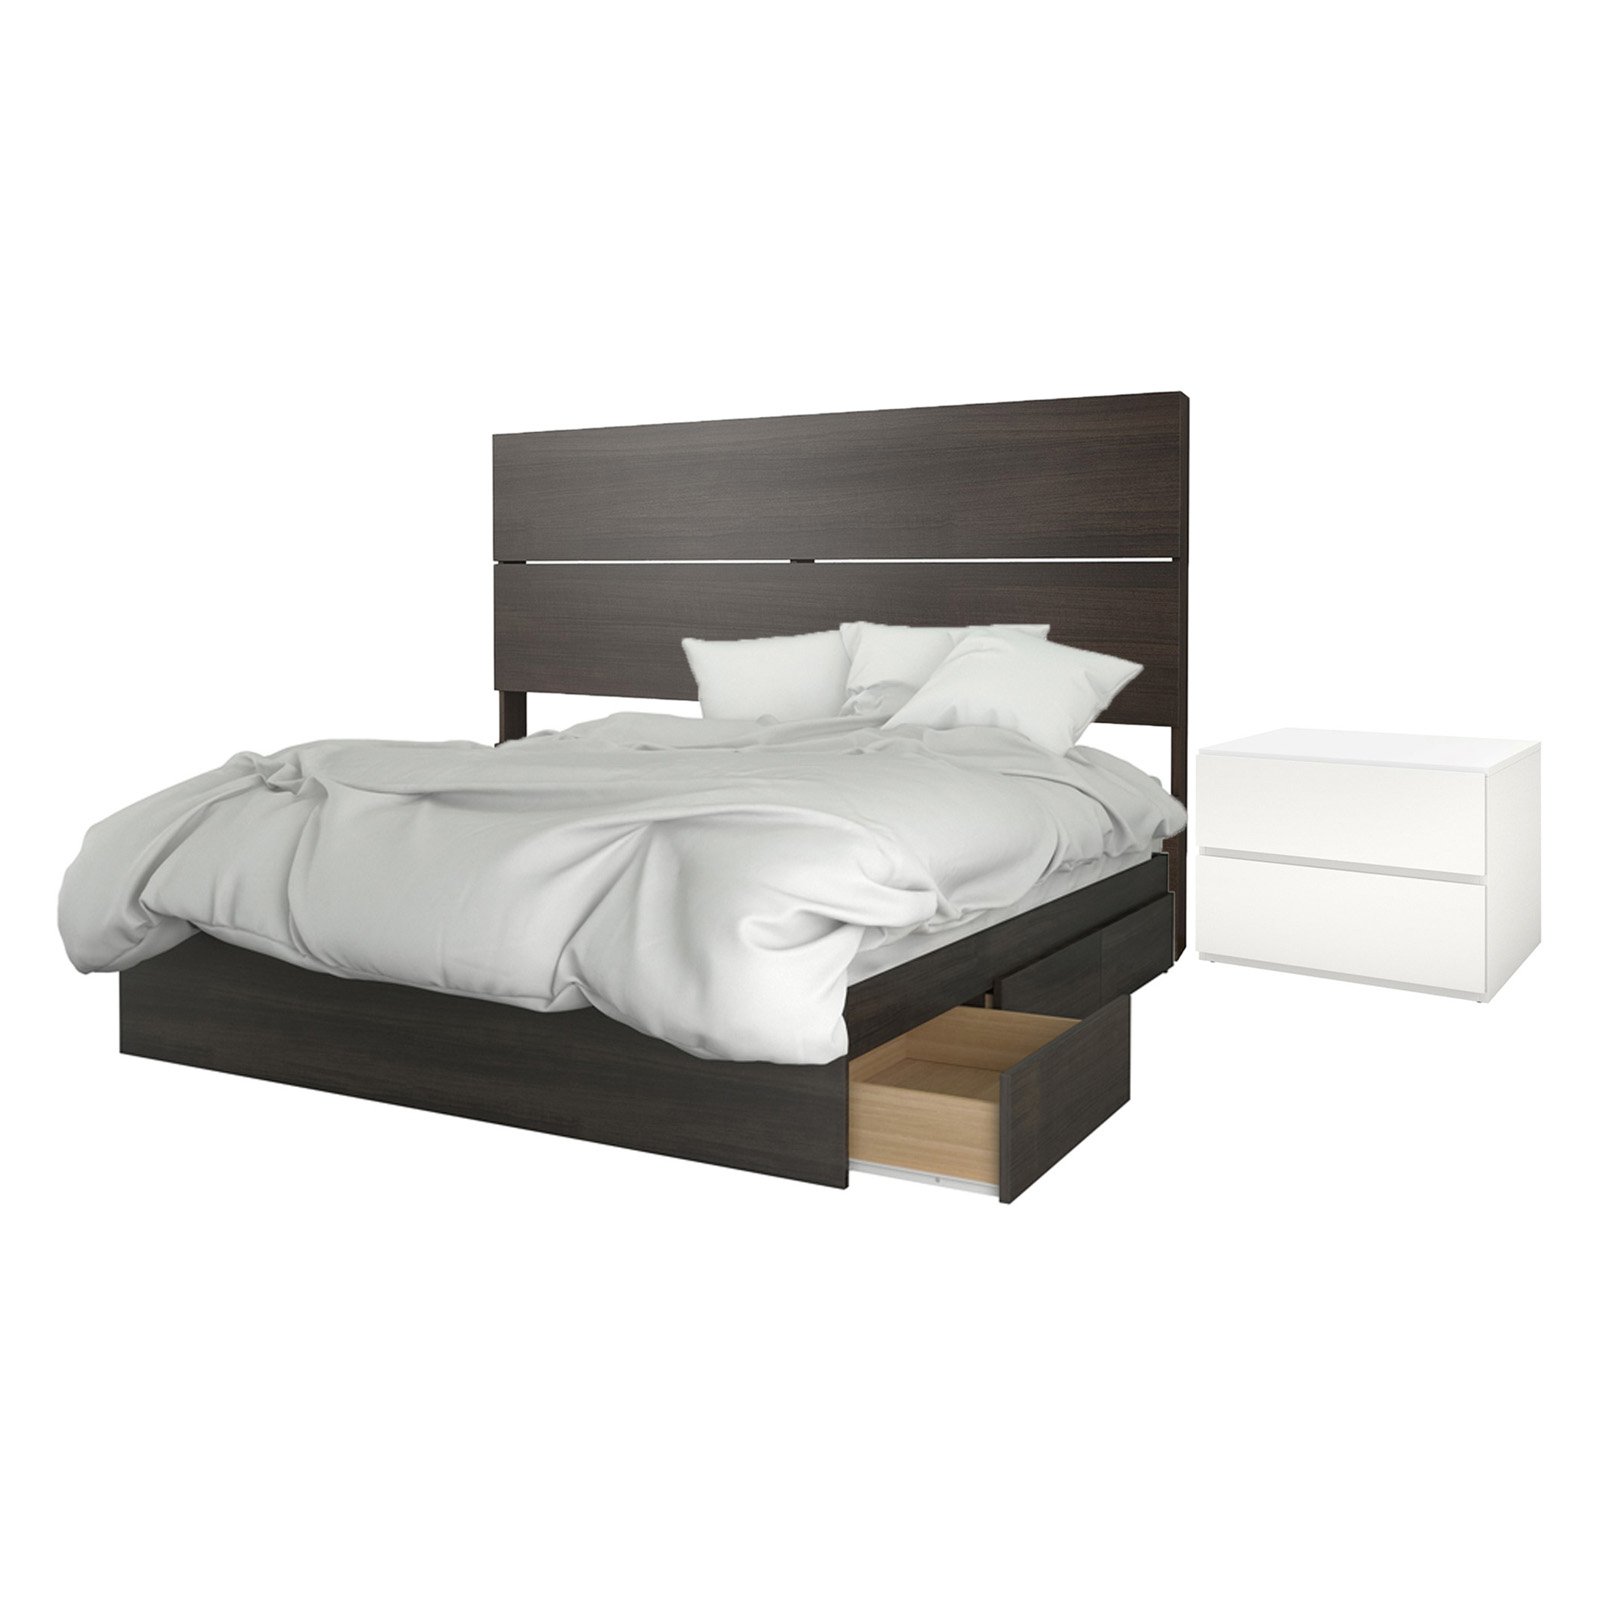 Nexera Melody Platform Storage Bed with Nightstand - image 2 of 11